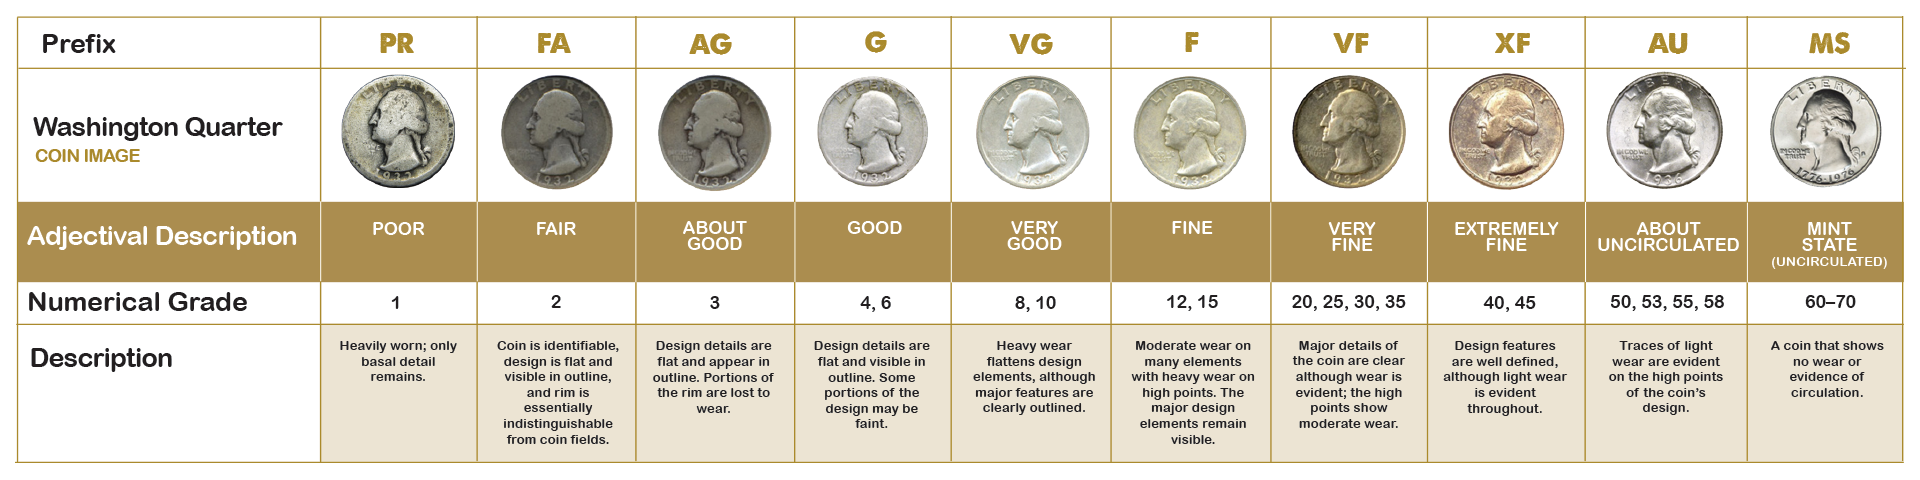 Coin Grading Terminology | FintechZoom